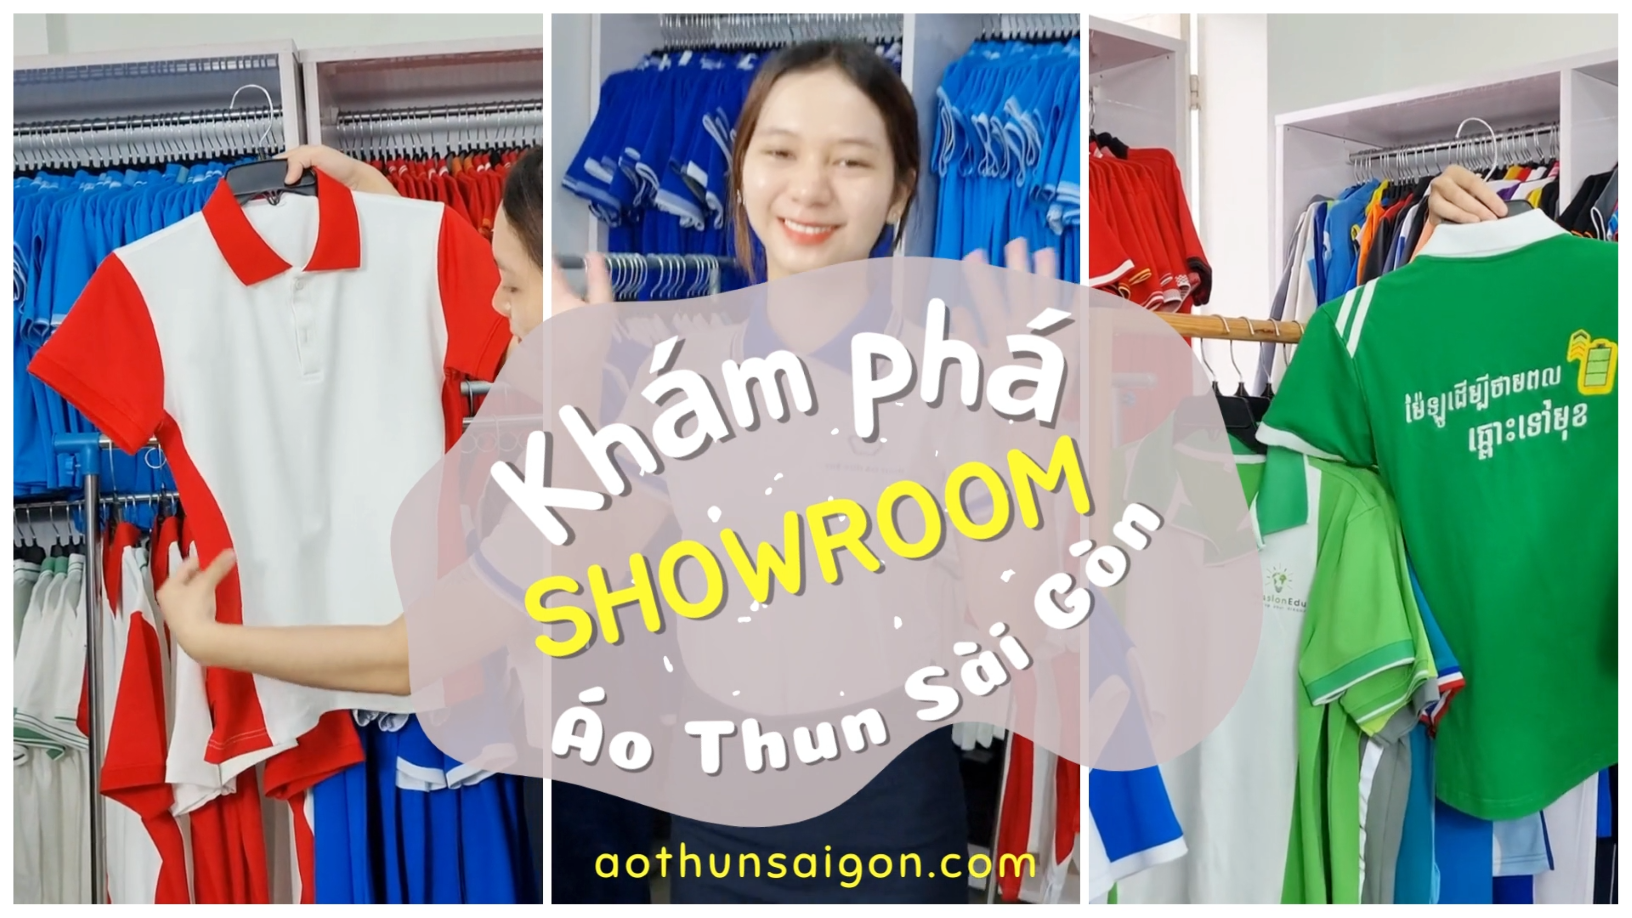 Video Gallery - kham pha showroom tasg 1.7